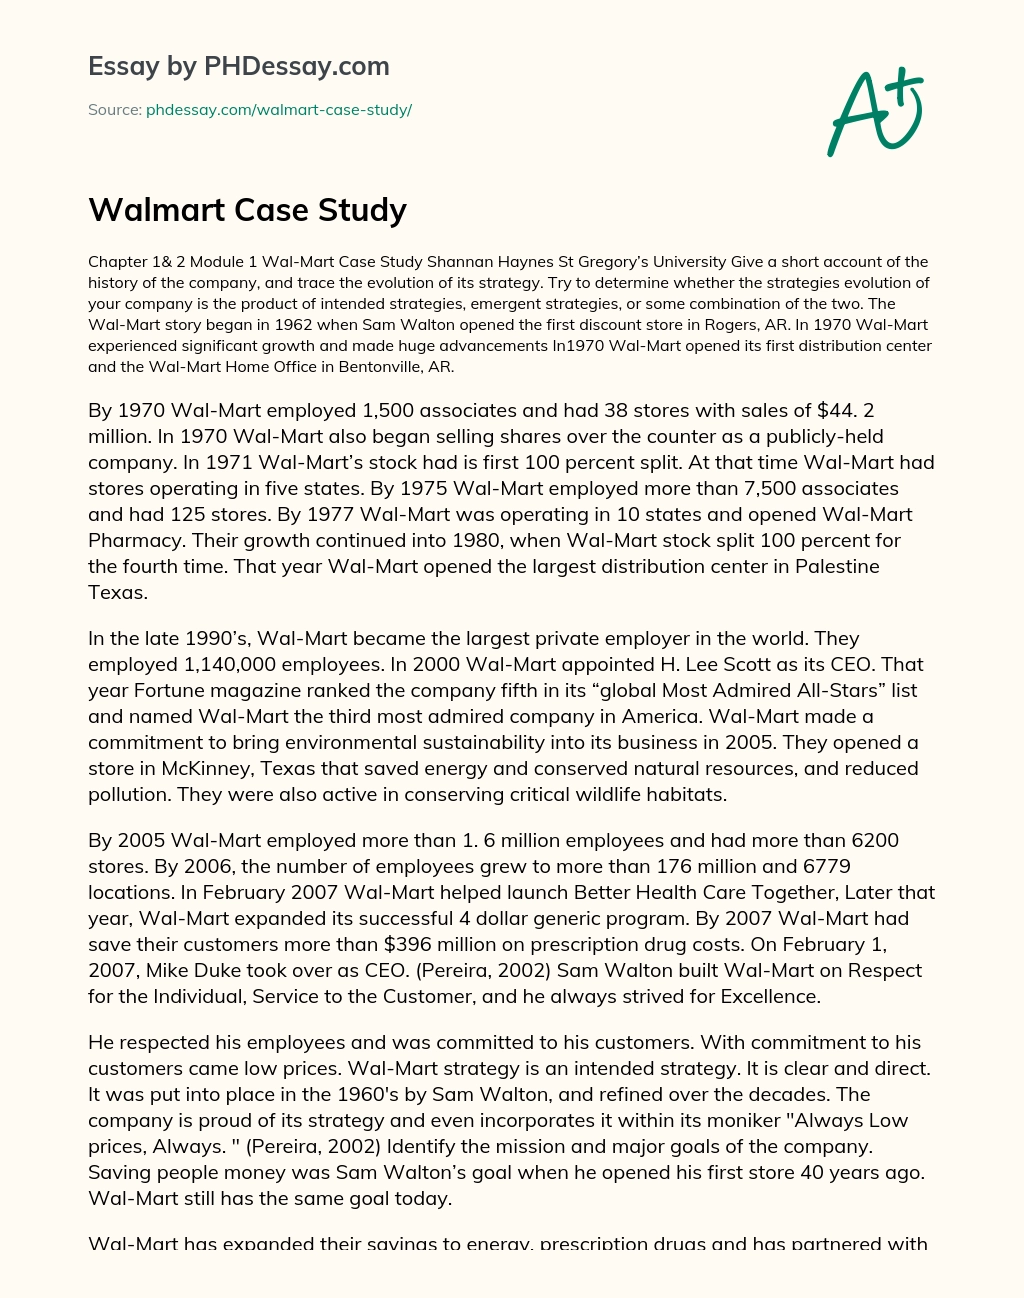 Walmart Case Study essay